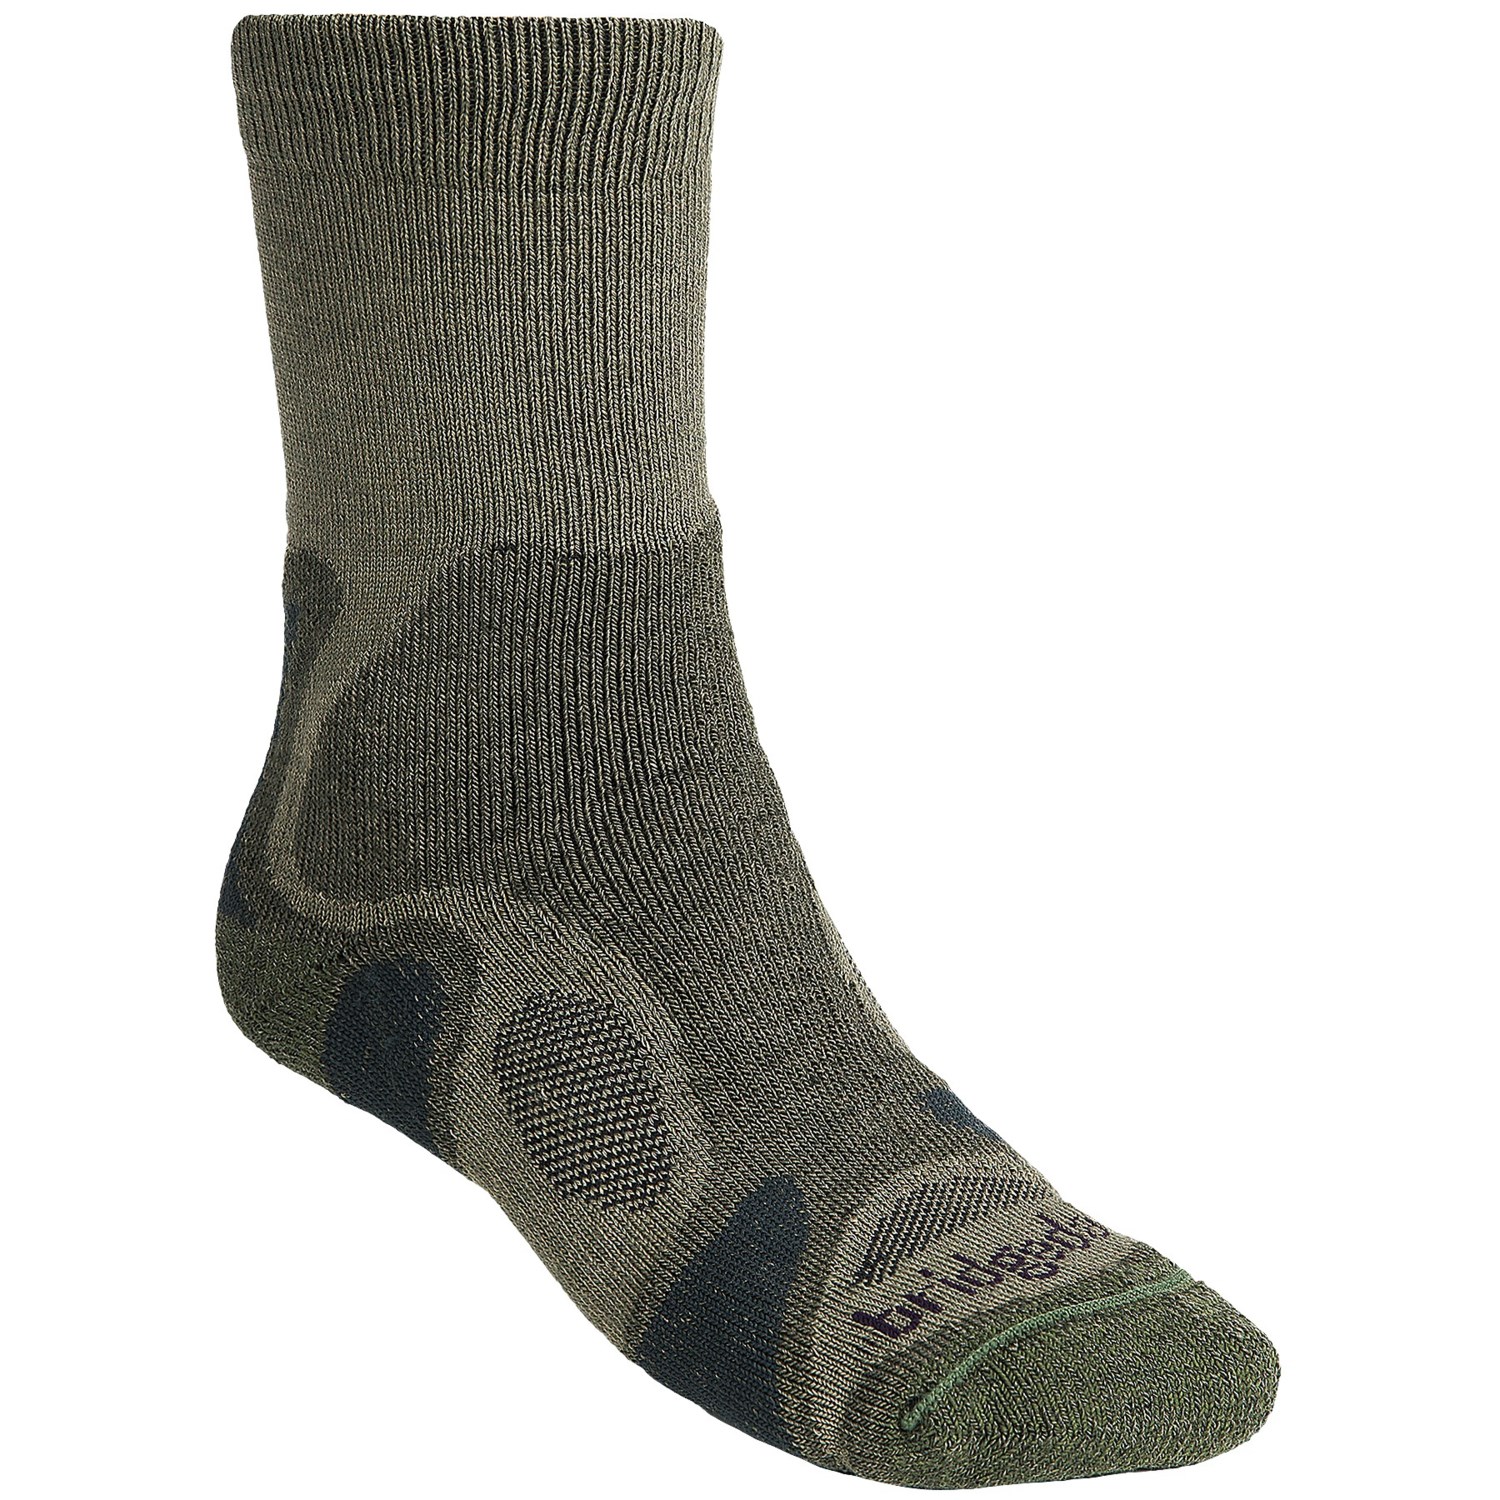  CoolFusion TrailBlaze Socks  Merino Wool For Men  Save 48%